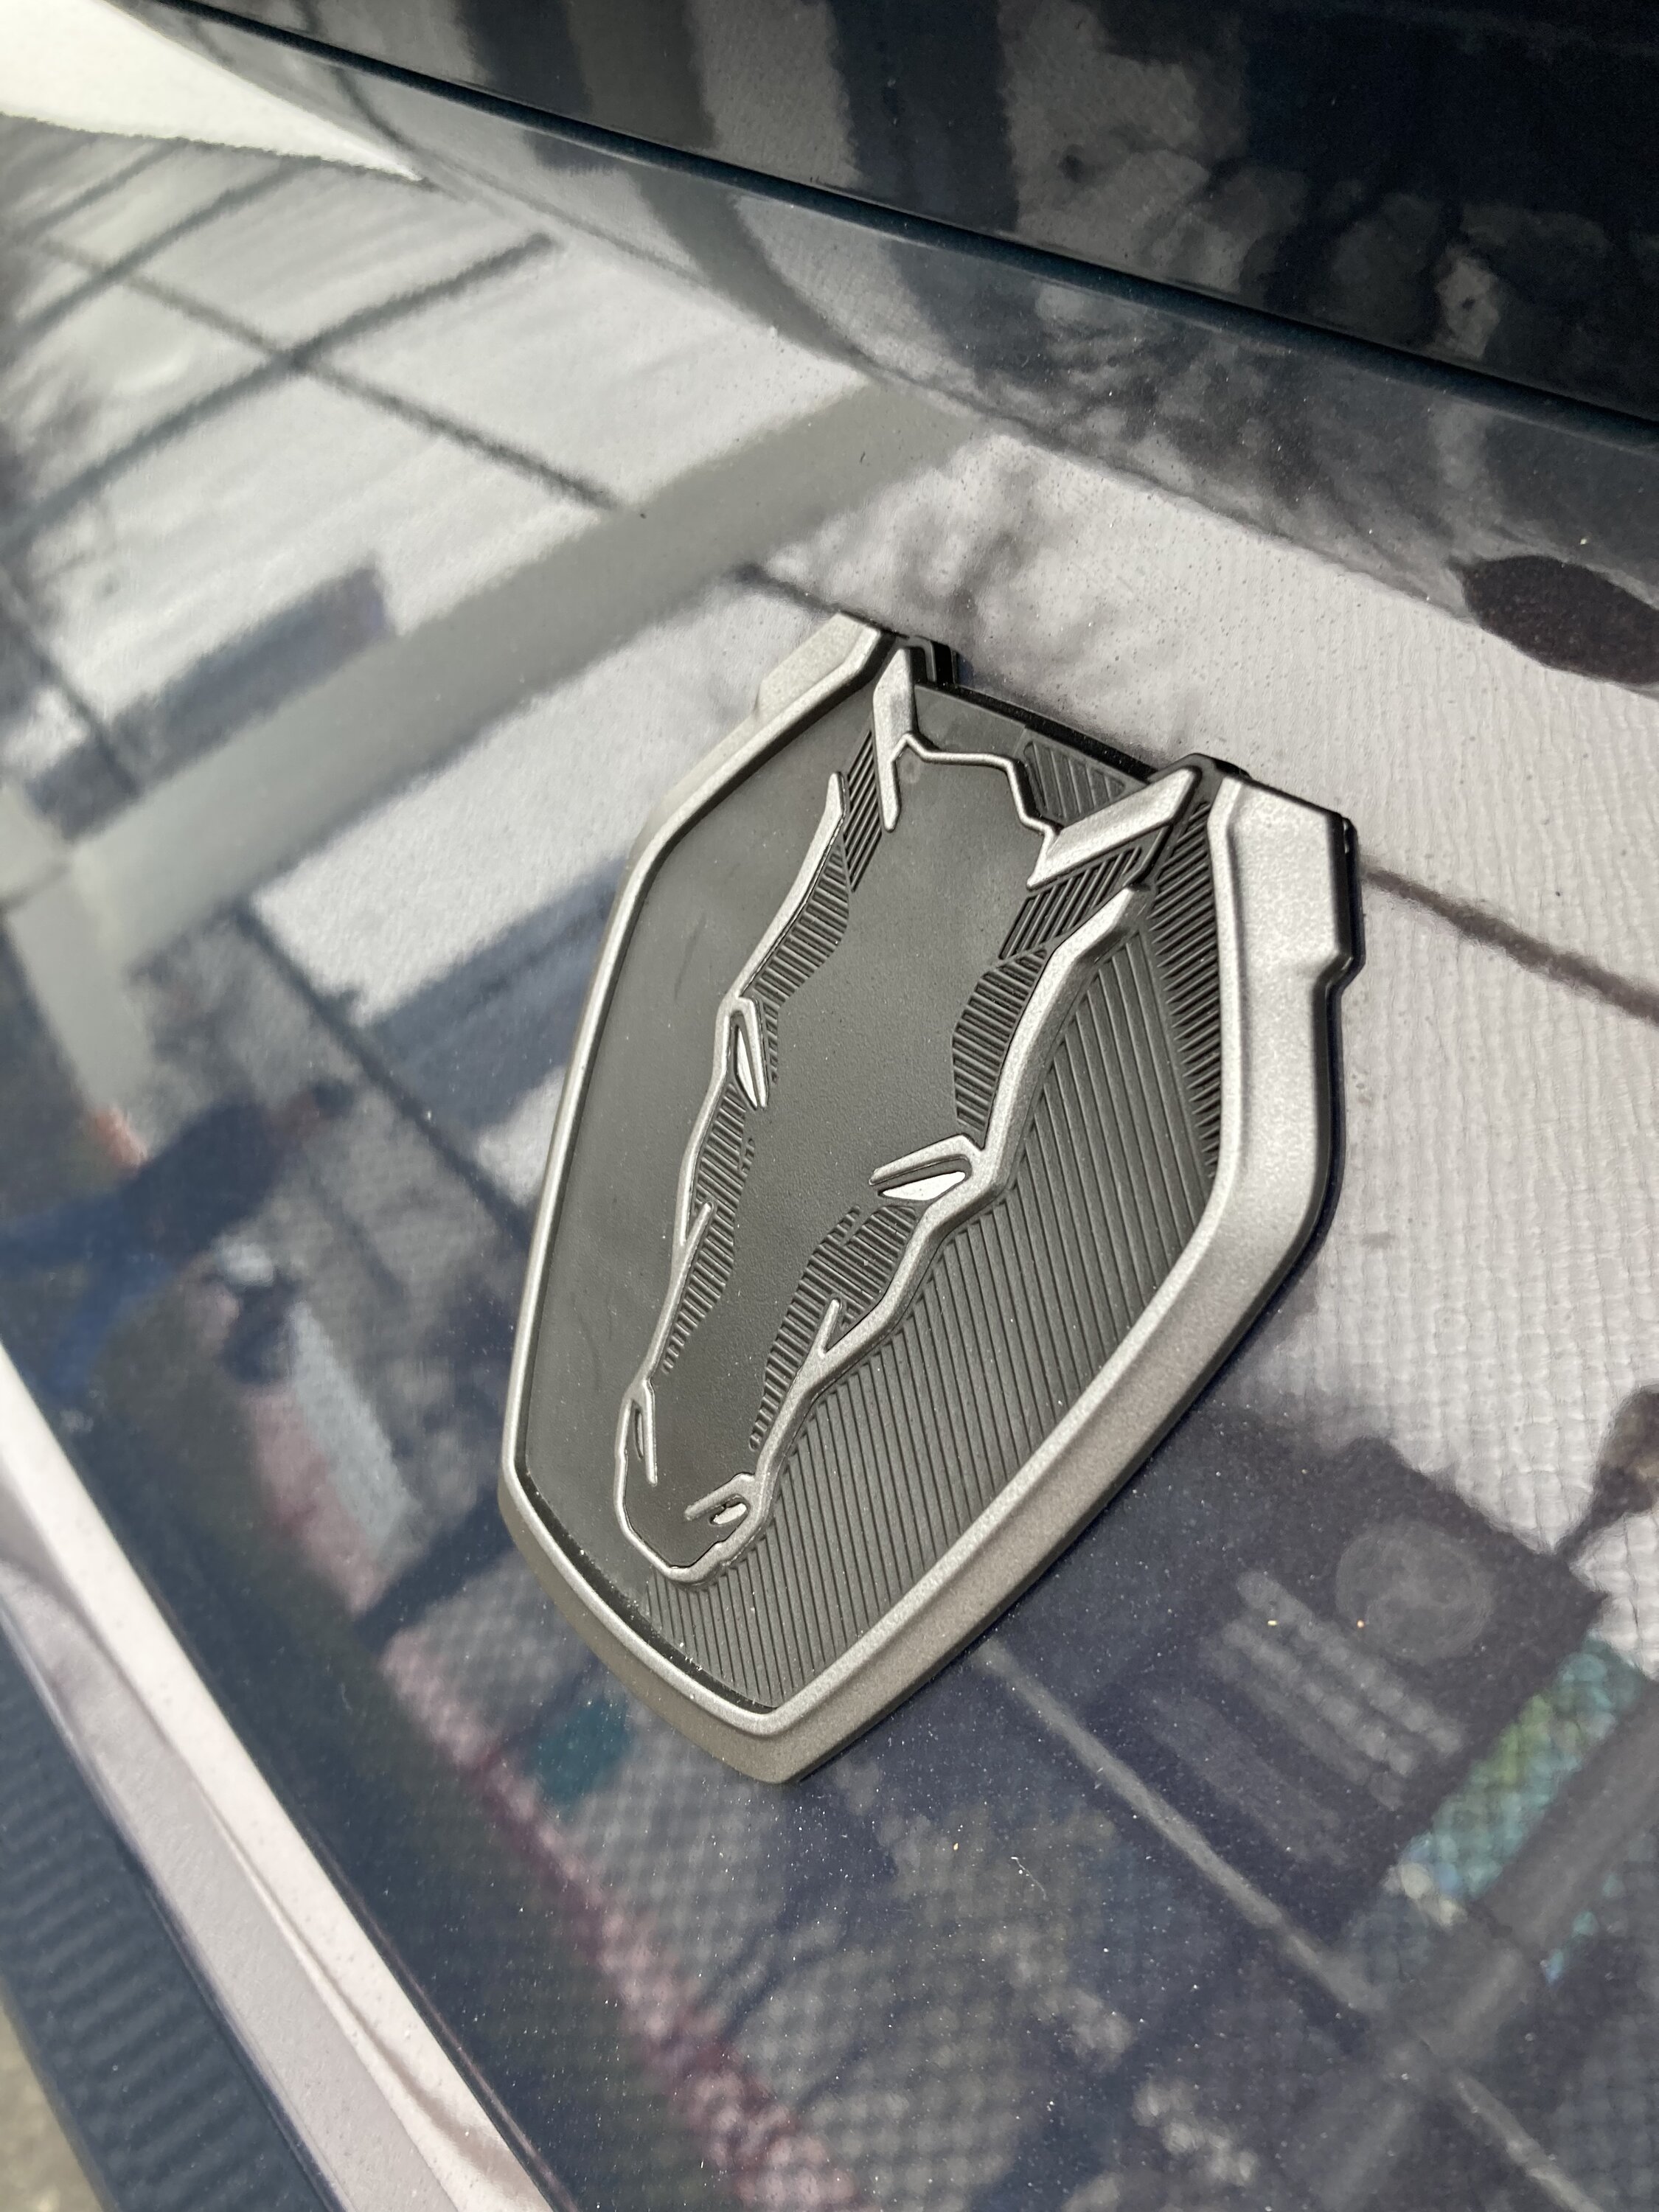 S650 Mustang Video: First Listen of Dark Horse Mustang WOT Driving on Public Roads + Blue Ember / Grabber Blue in Natural Lighting F3136D2B-8B74-4AF1-9E79-098B85001852